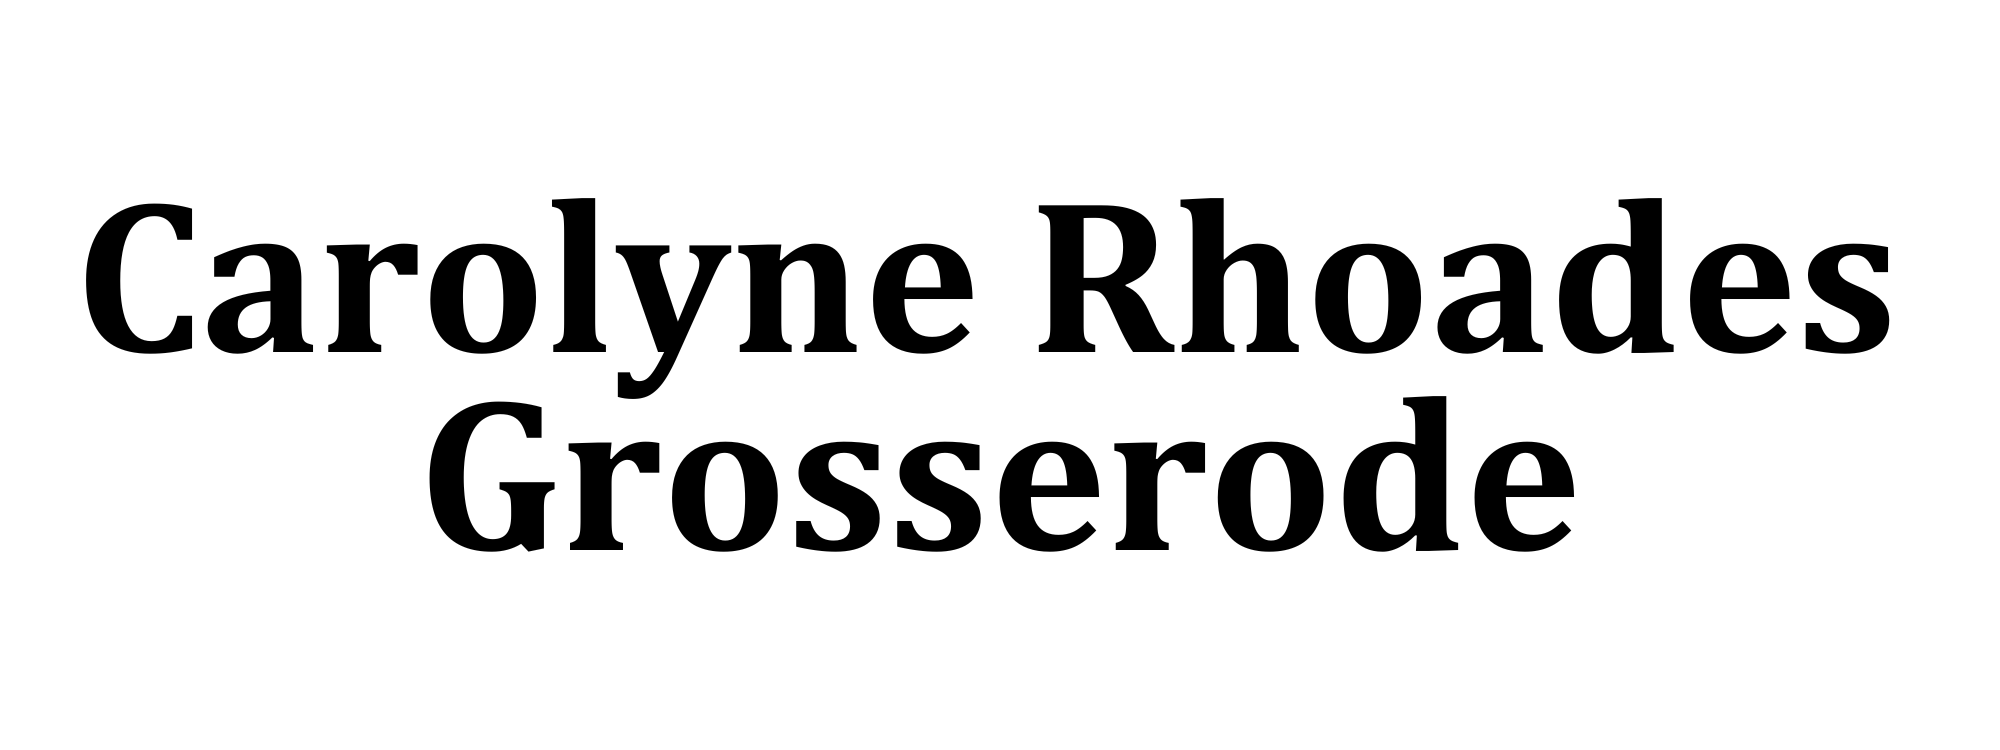 Carolyne Rhoades Grosserode logo.png